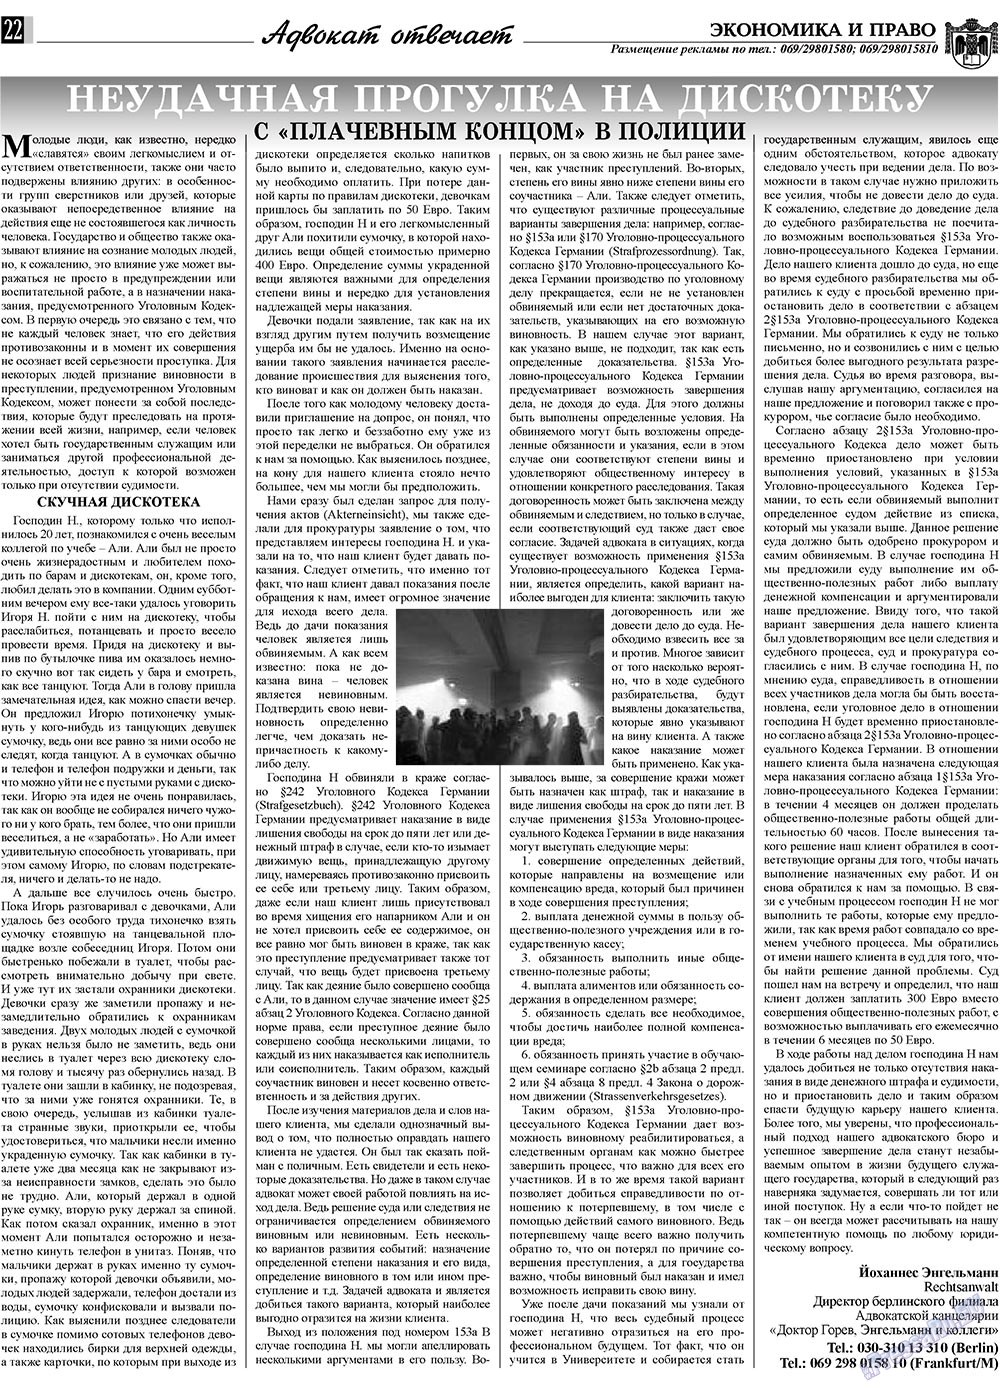 Ekonomika i pravo (Zeitung). 2010 Jahr, Ausgabe 3, Seite 22